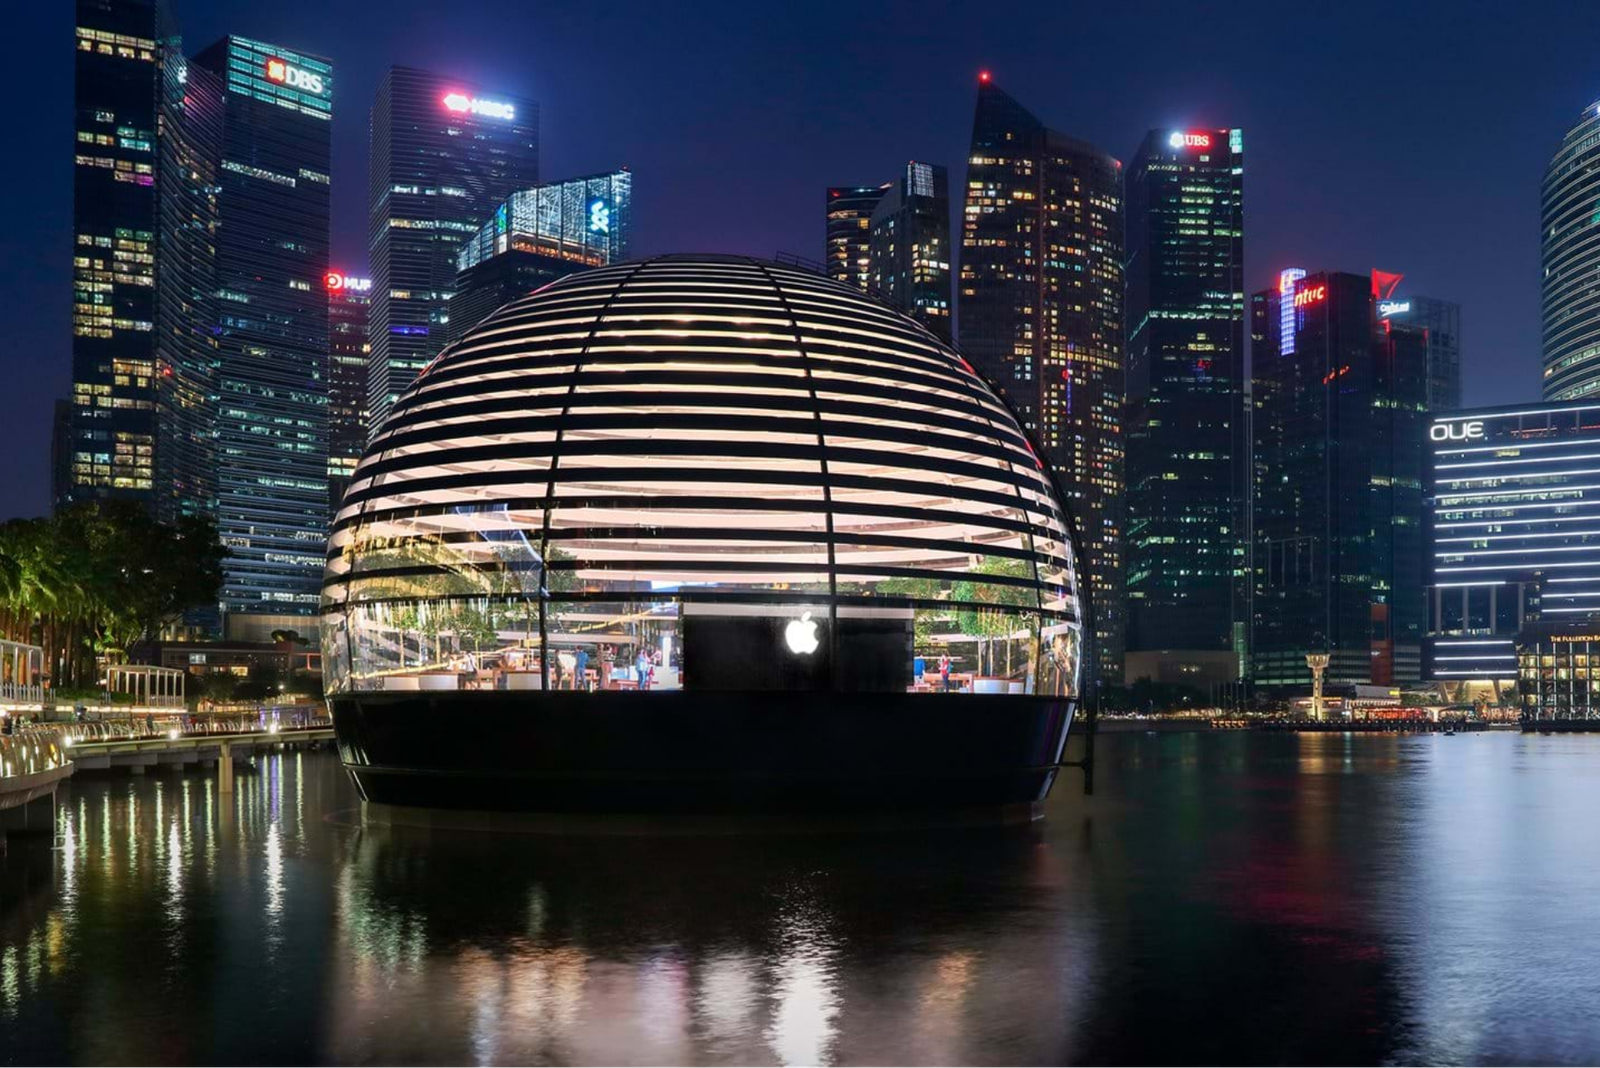 Apple Marina Bay Sands, Singapore, 2016 - 2020